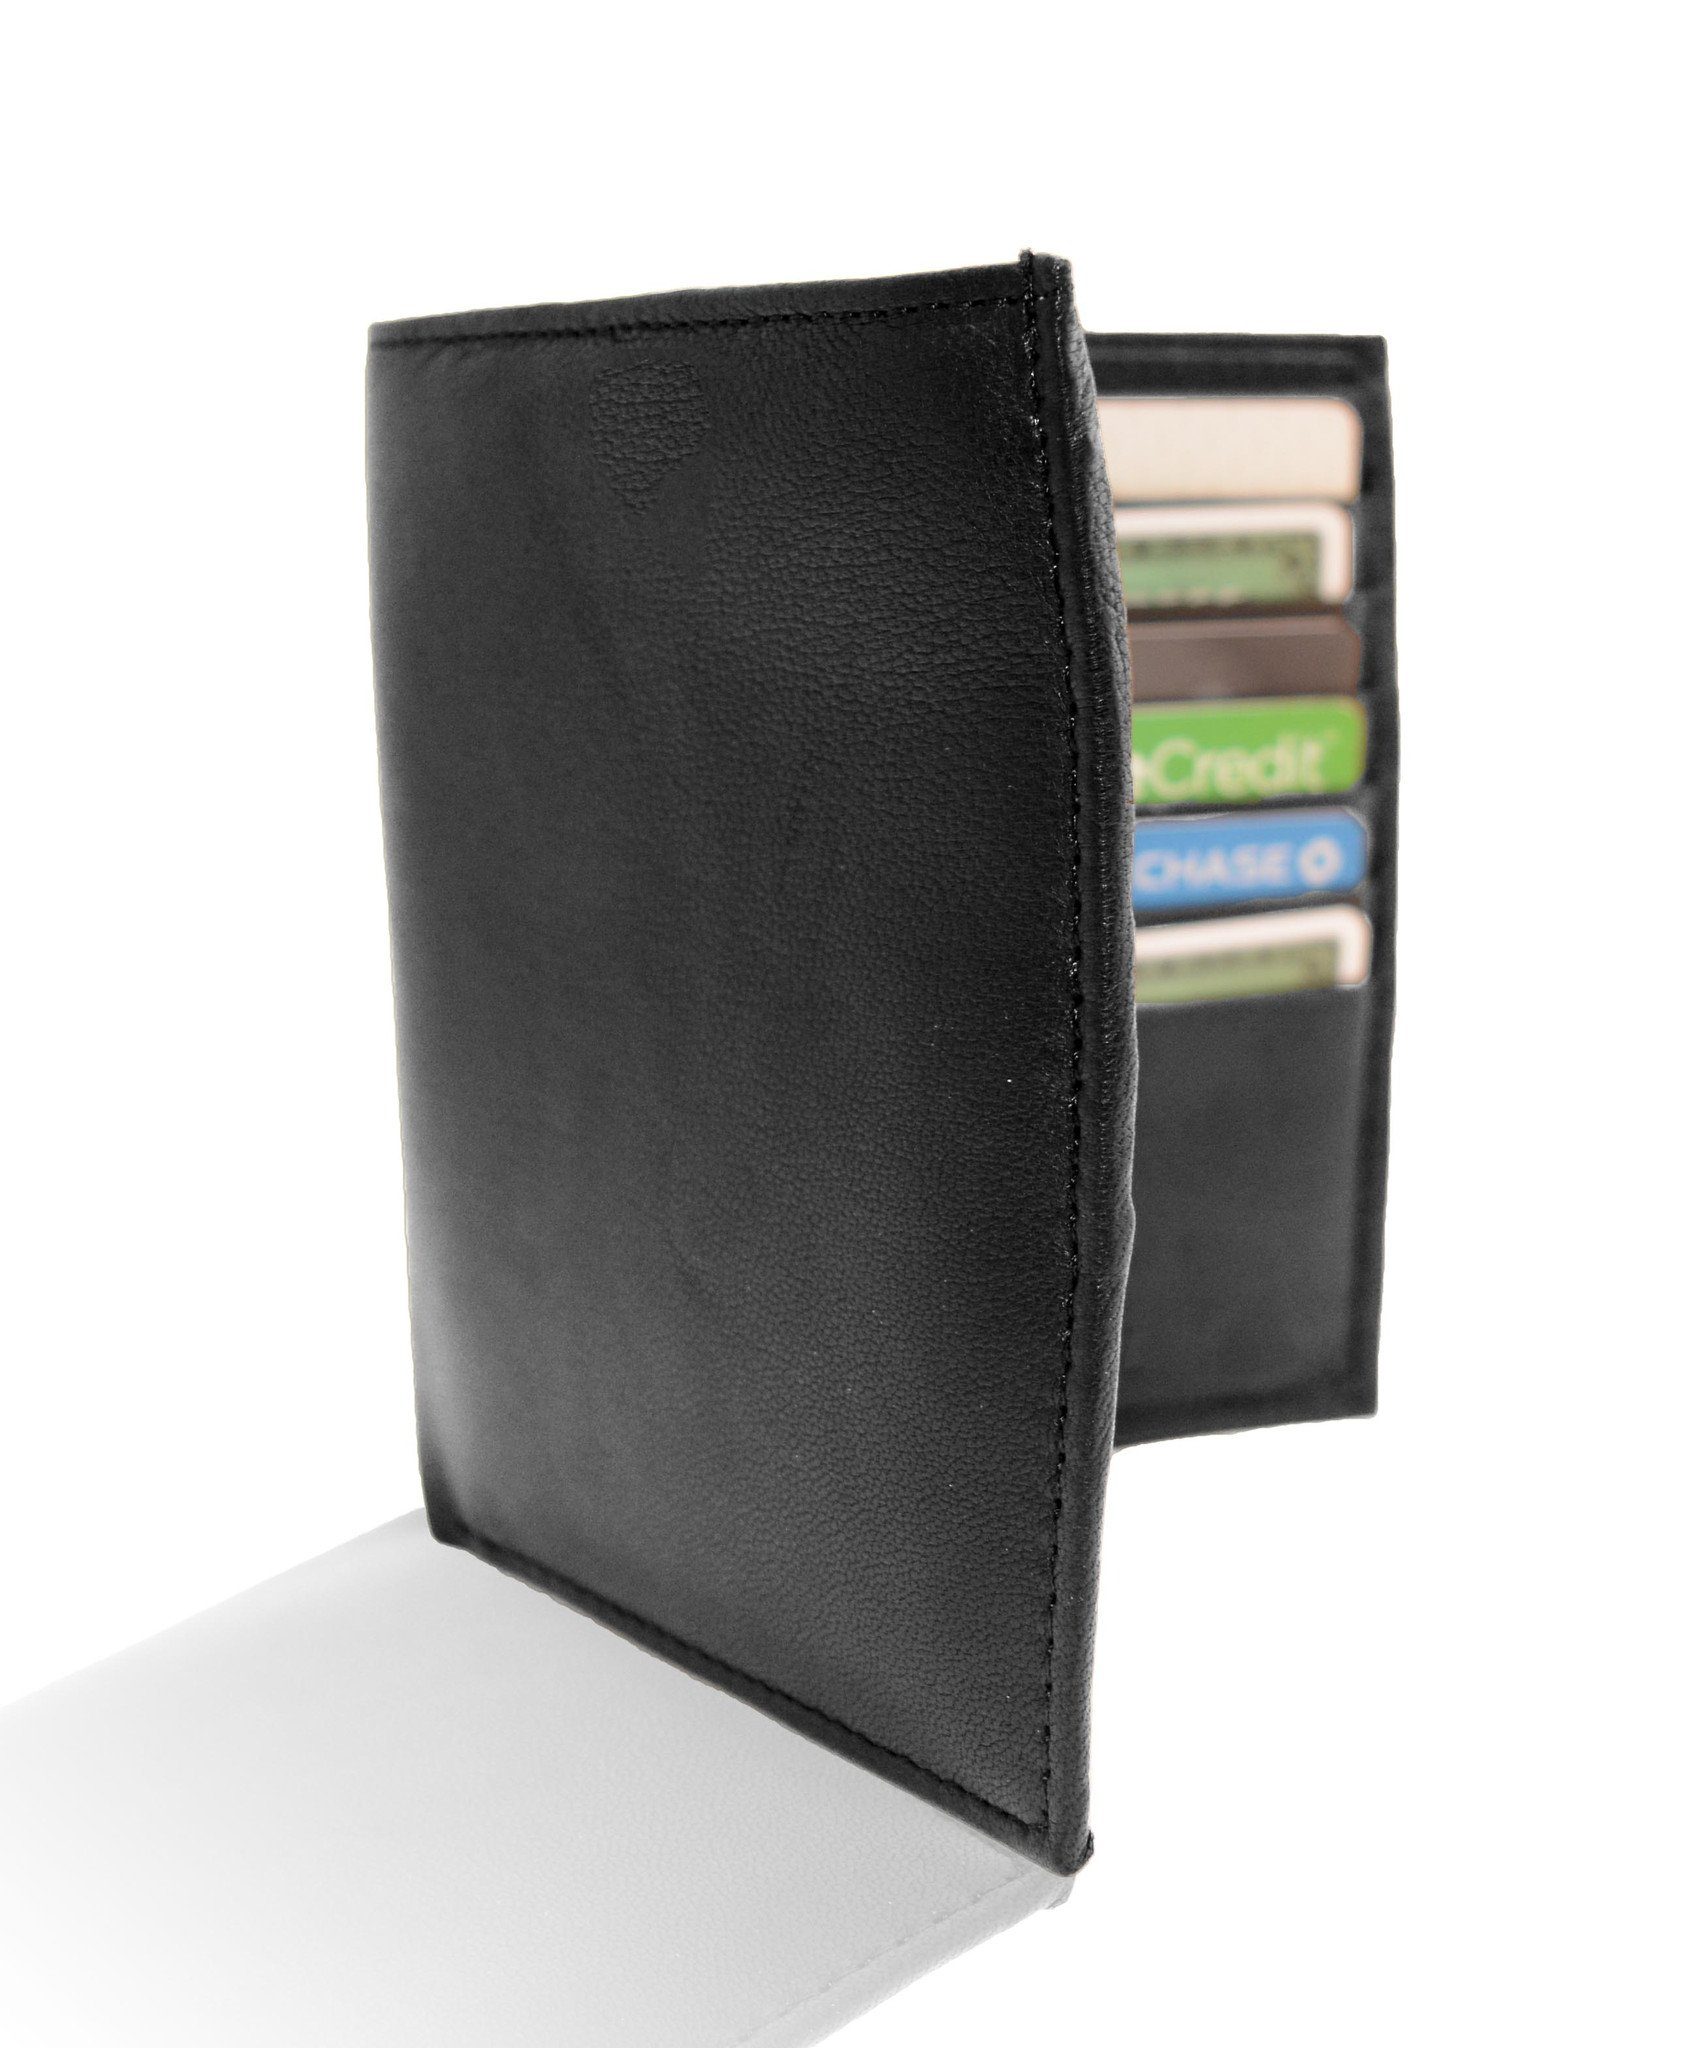 Adorable Deluxe RFID-Blocking Genuine Leather Bifold Wallet For Men - Black